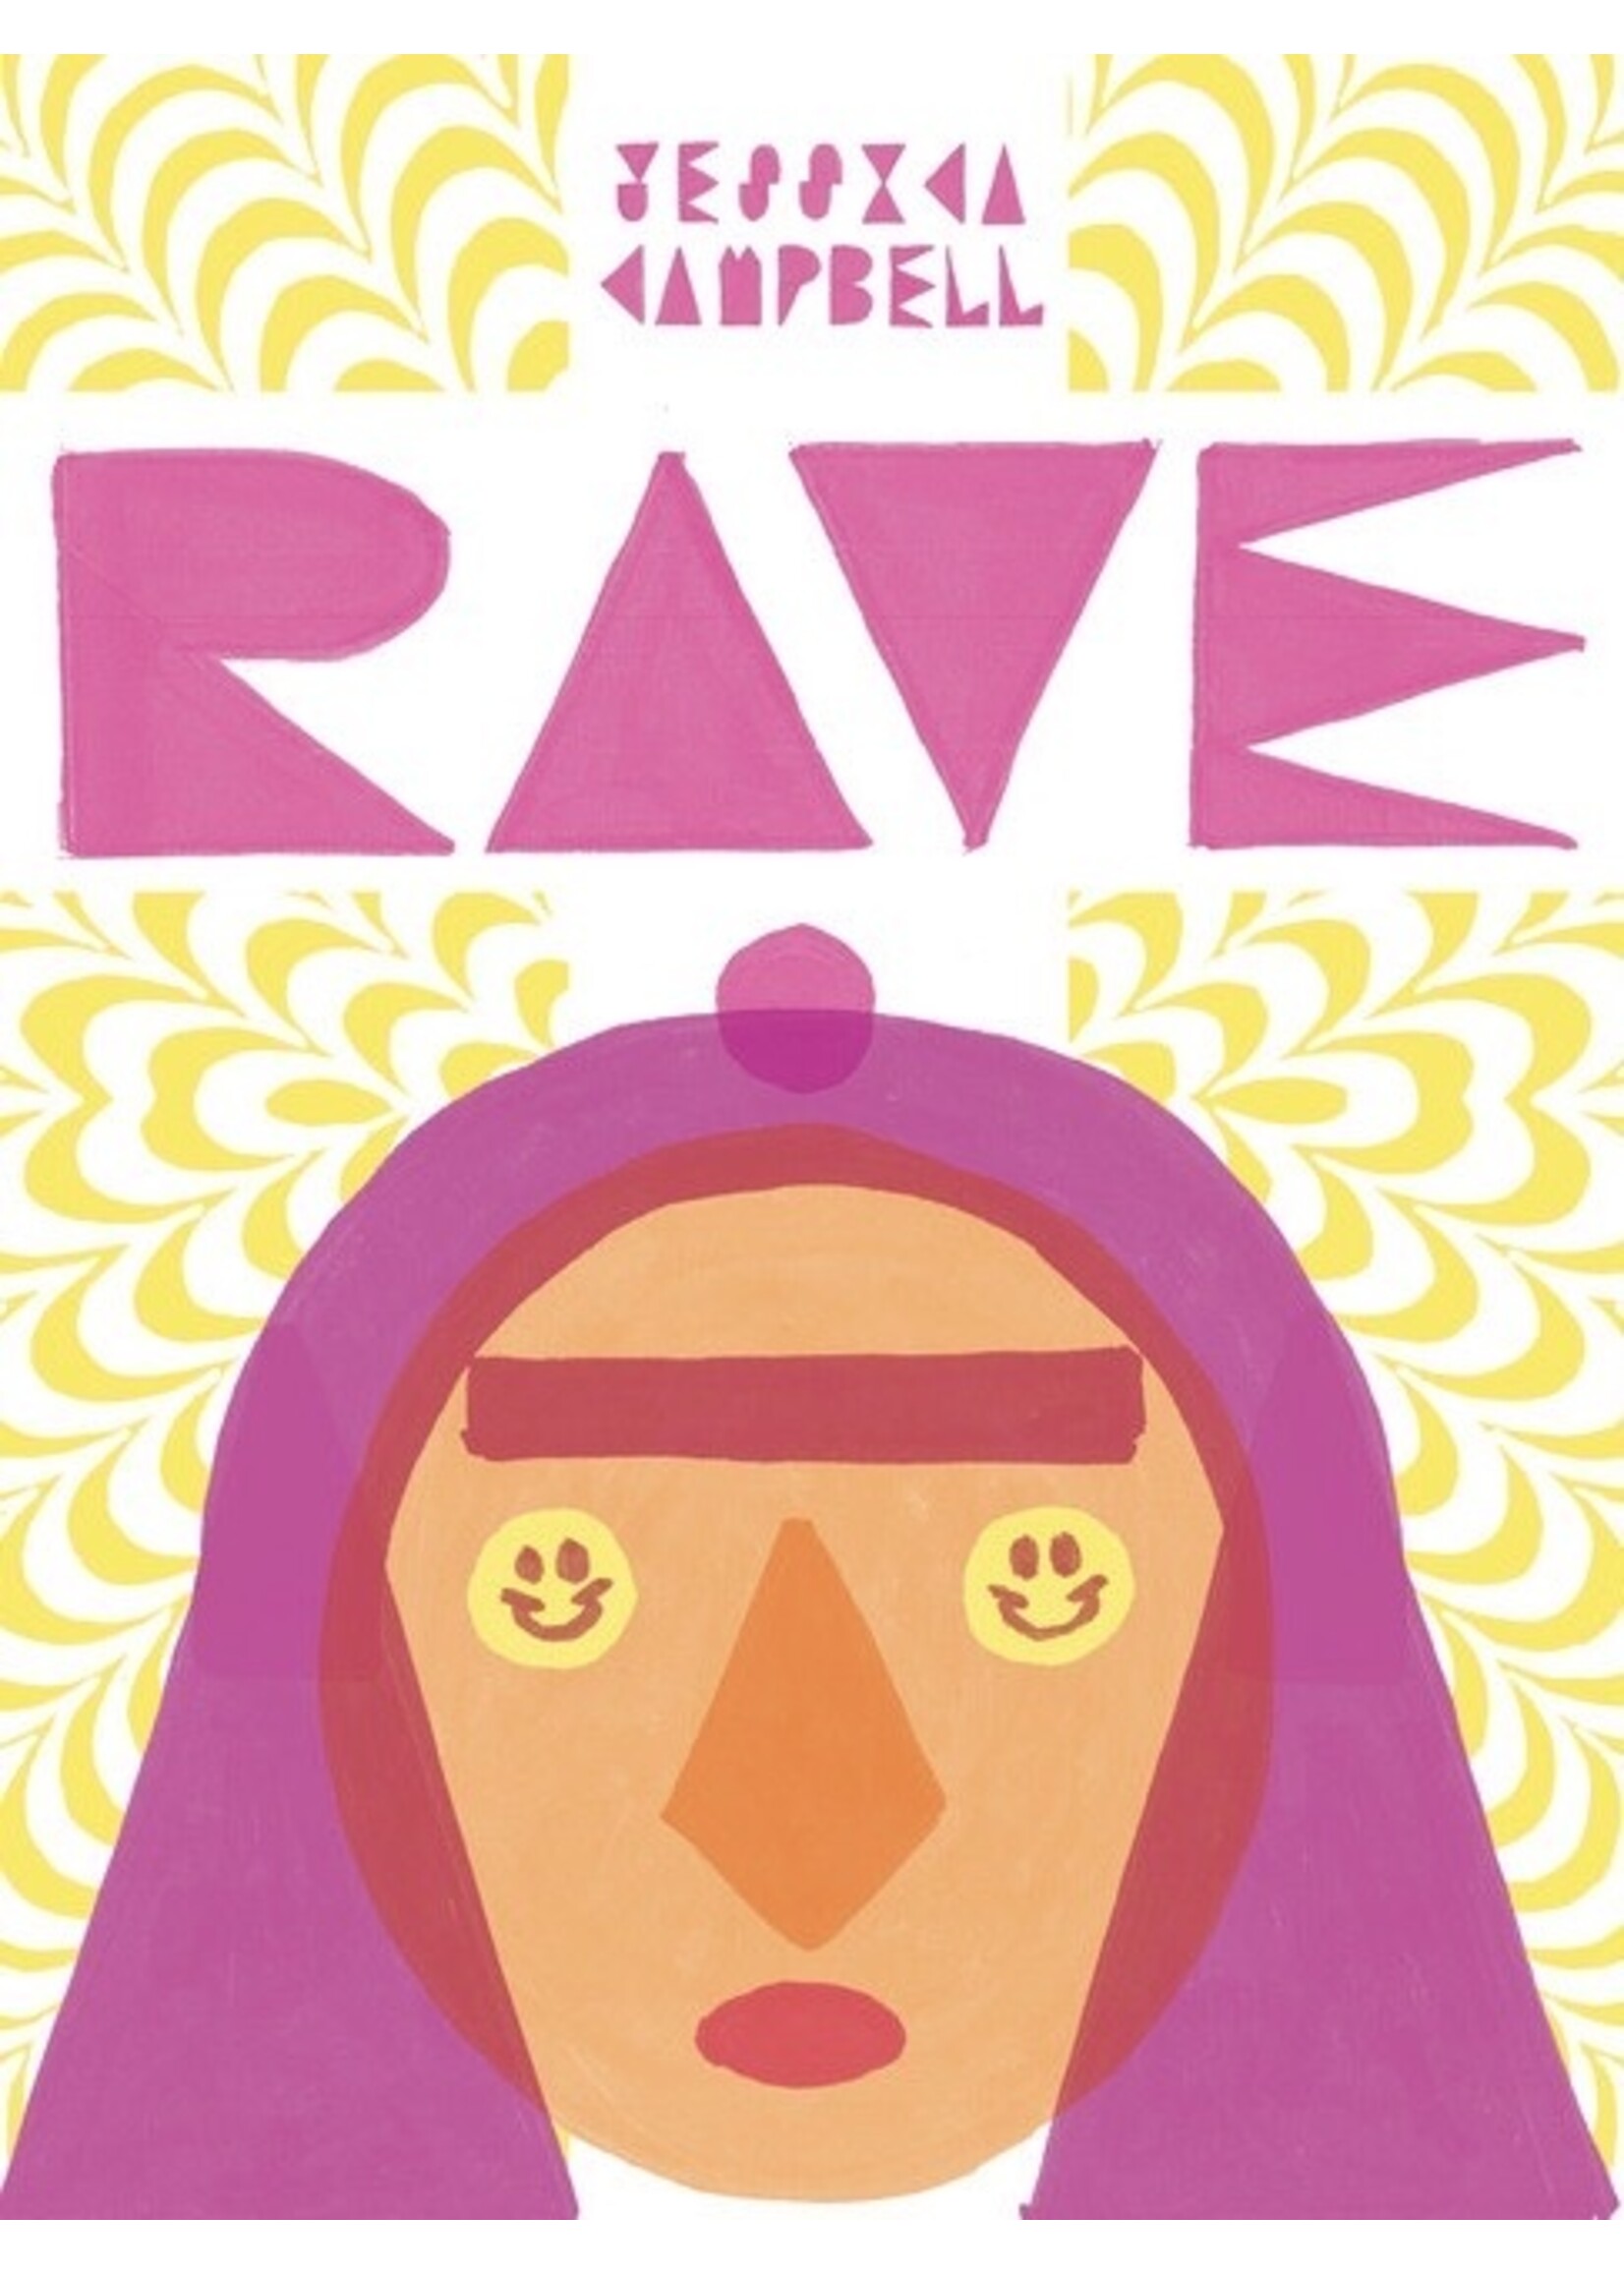 Drawn & Quarterly "Rave" par Jessica Campbell, Drawn & Quarterly